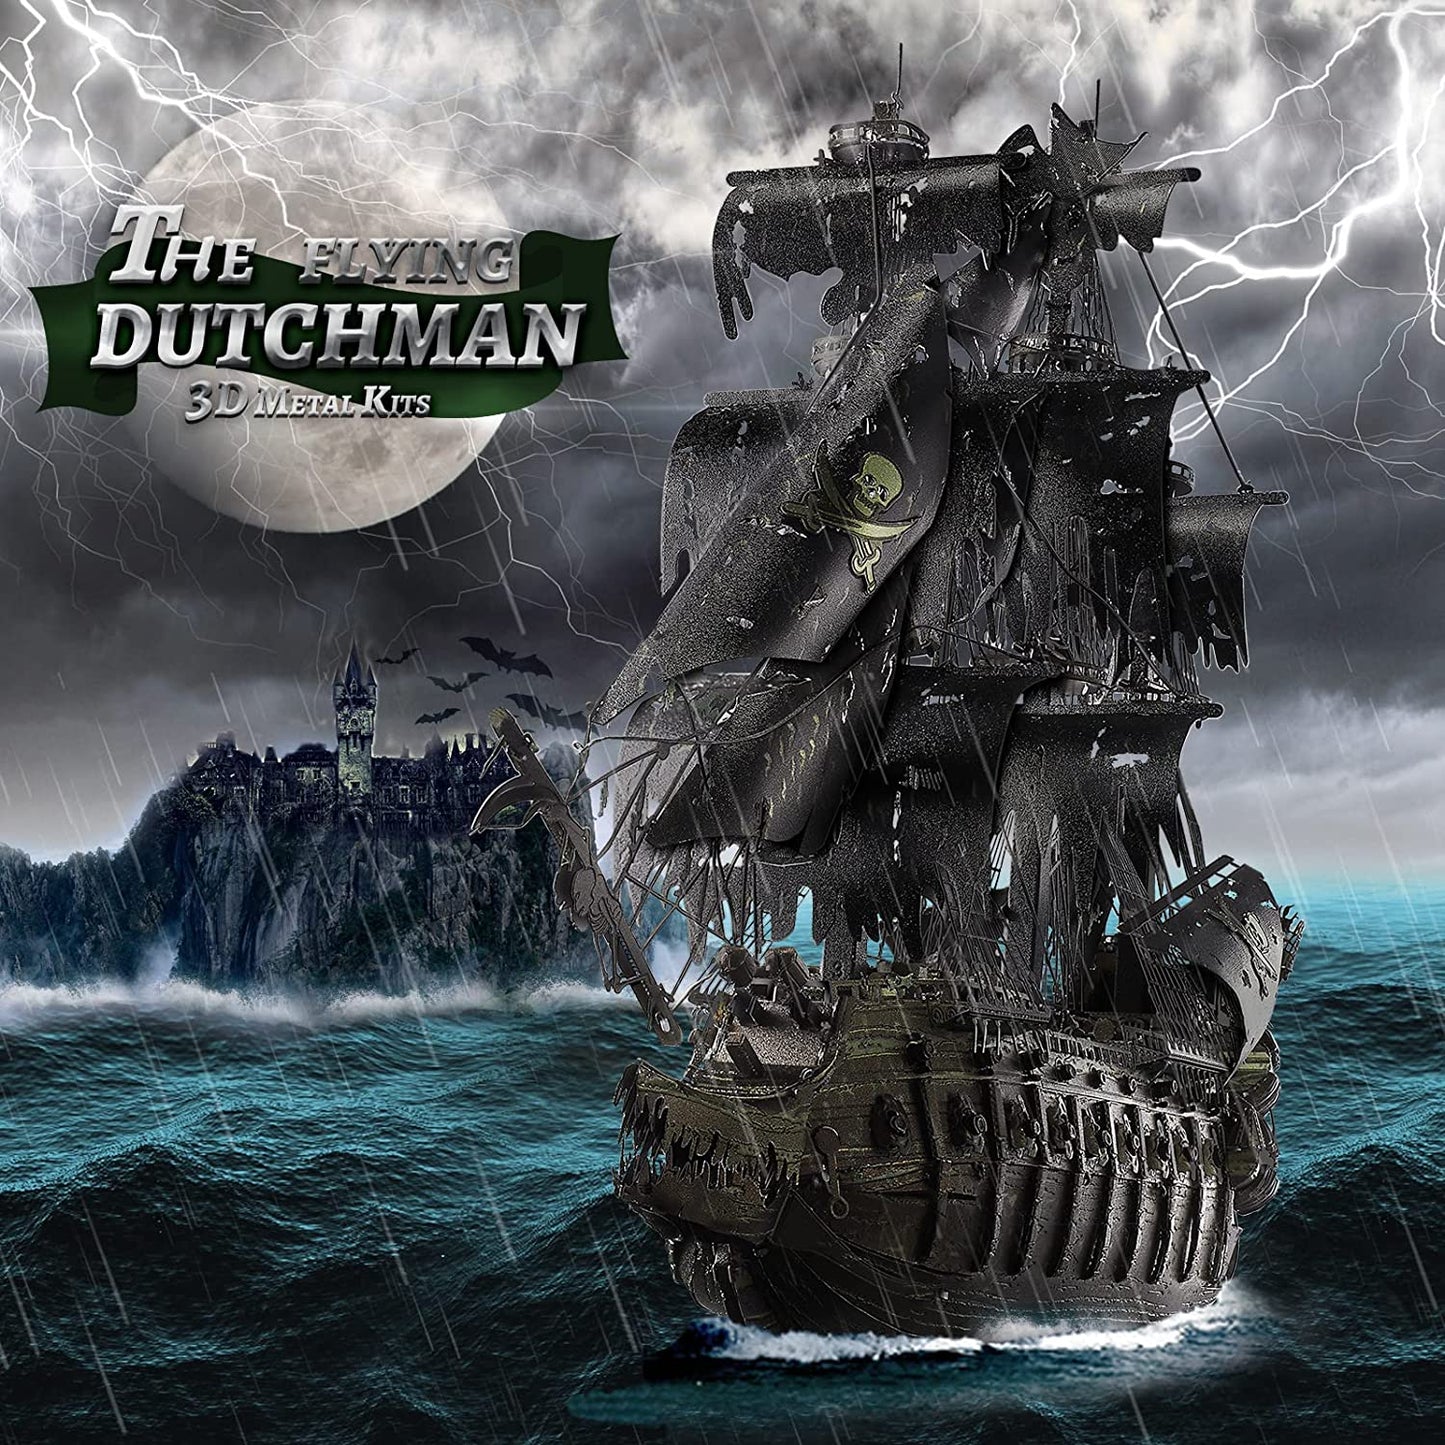 Piececool Flying Dutchman Pirate Ship Model Kits